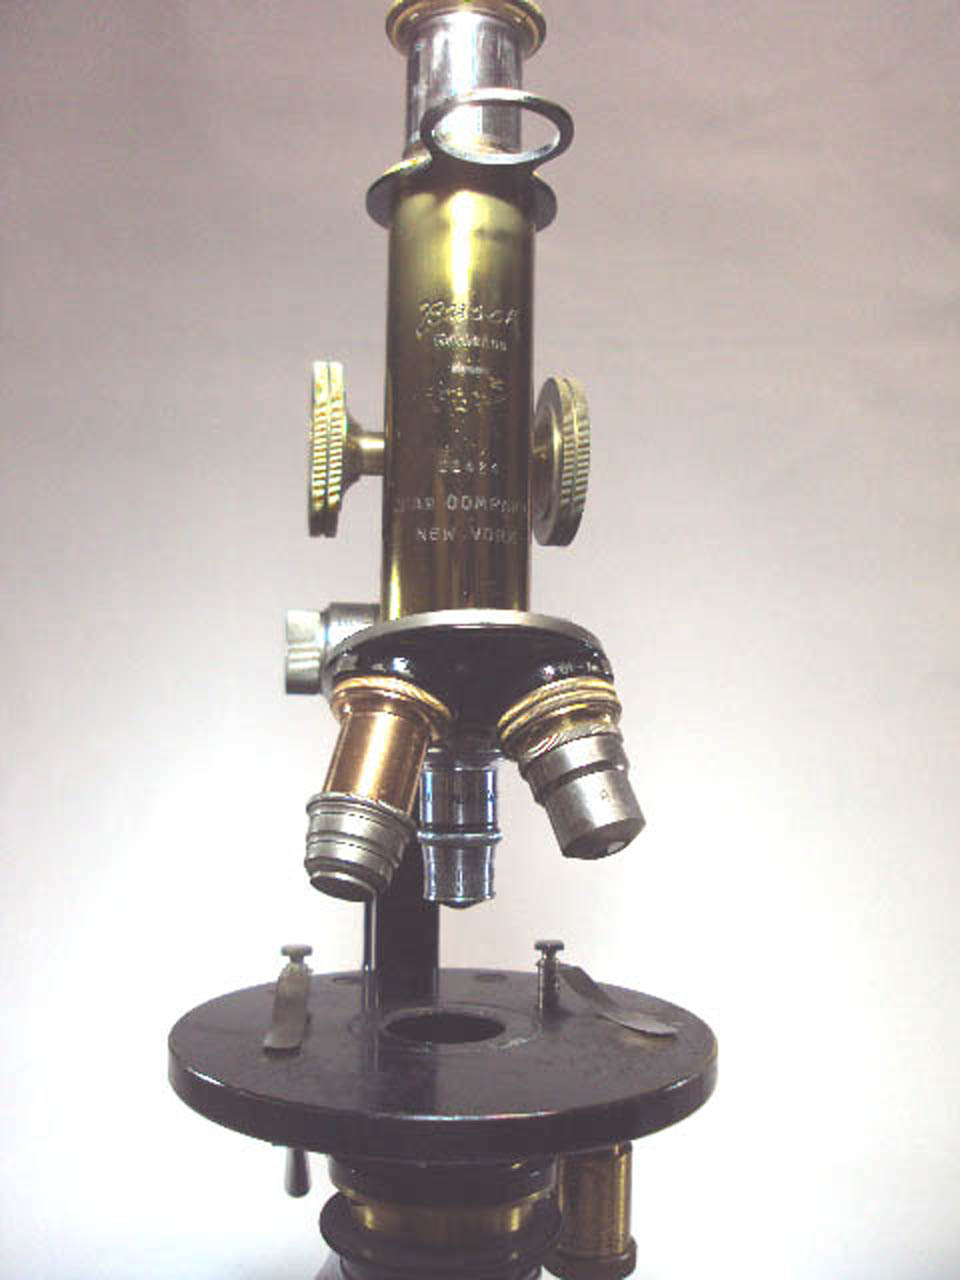 Busch Microscope